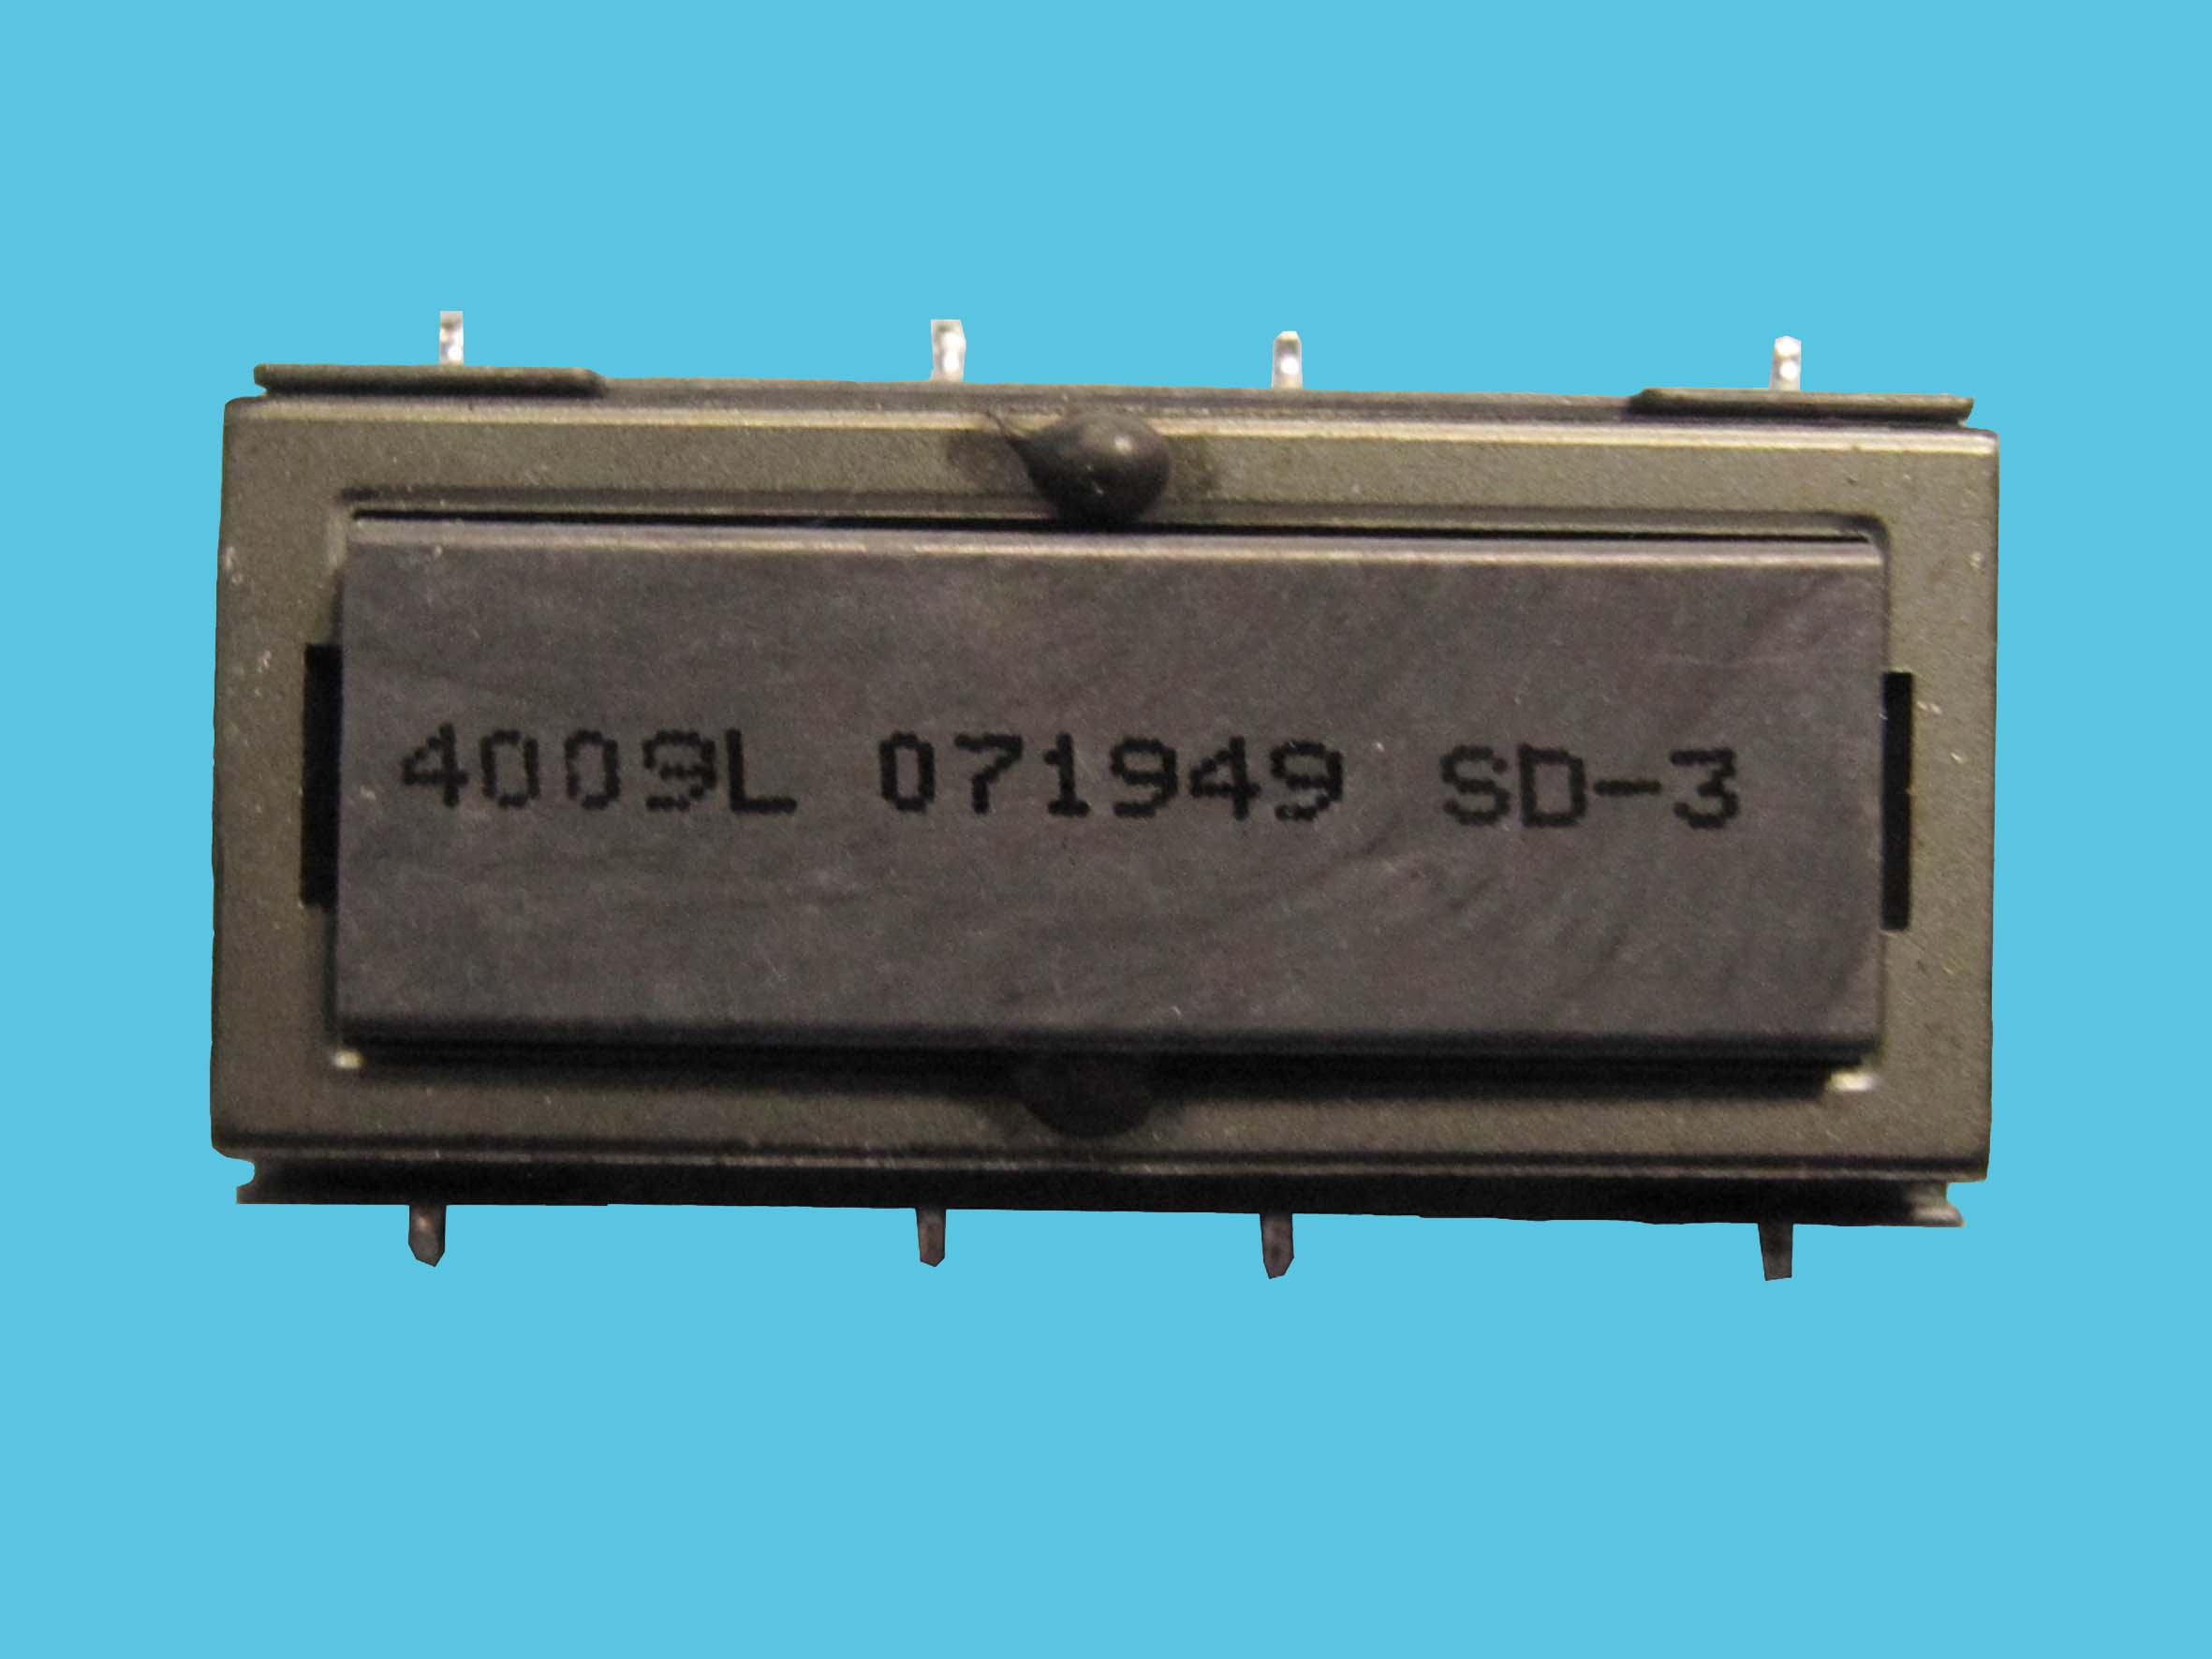 Transf. inverter 4009L para VK - IE40012 - *